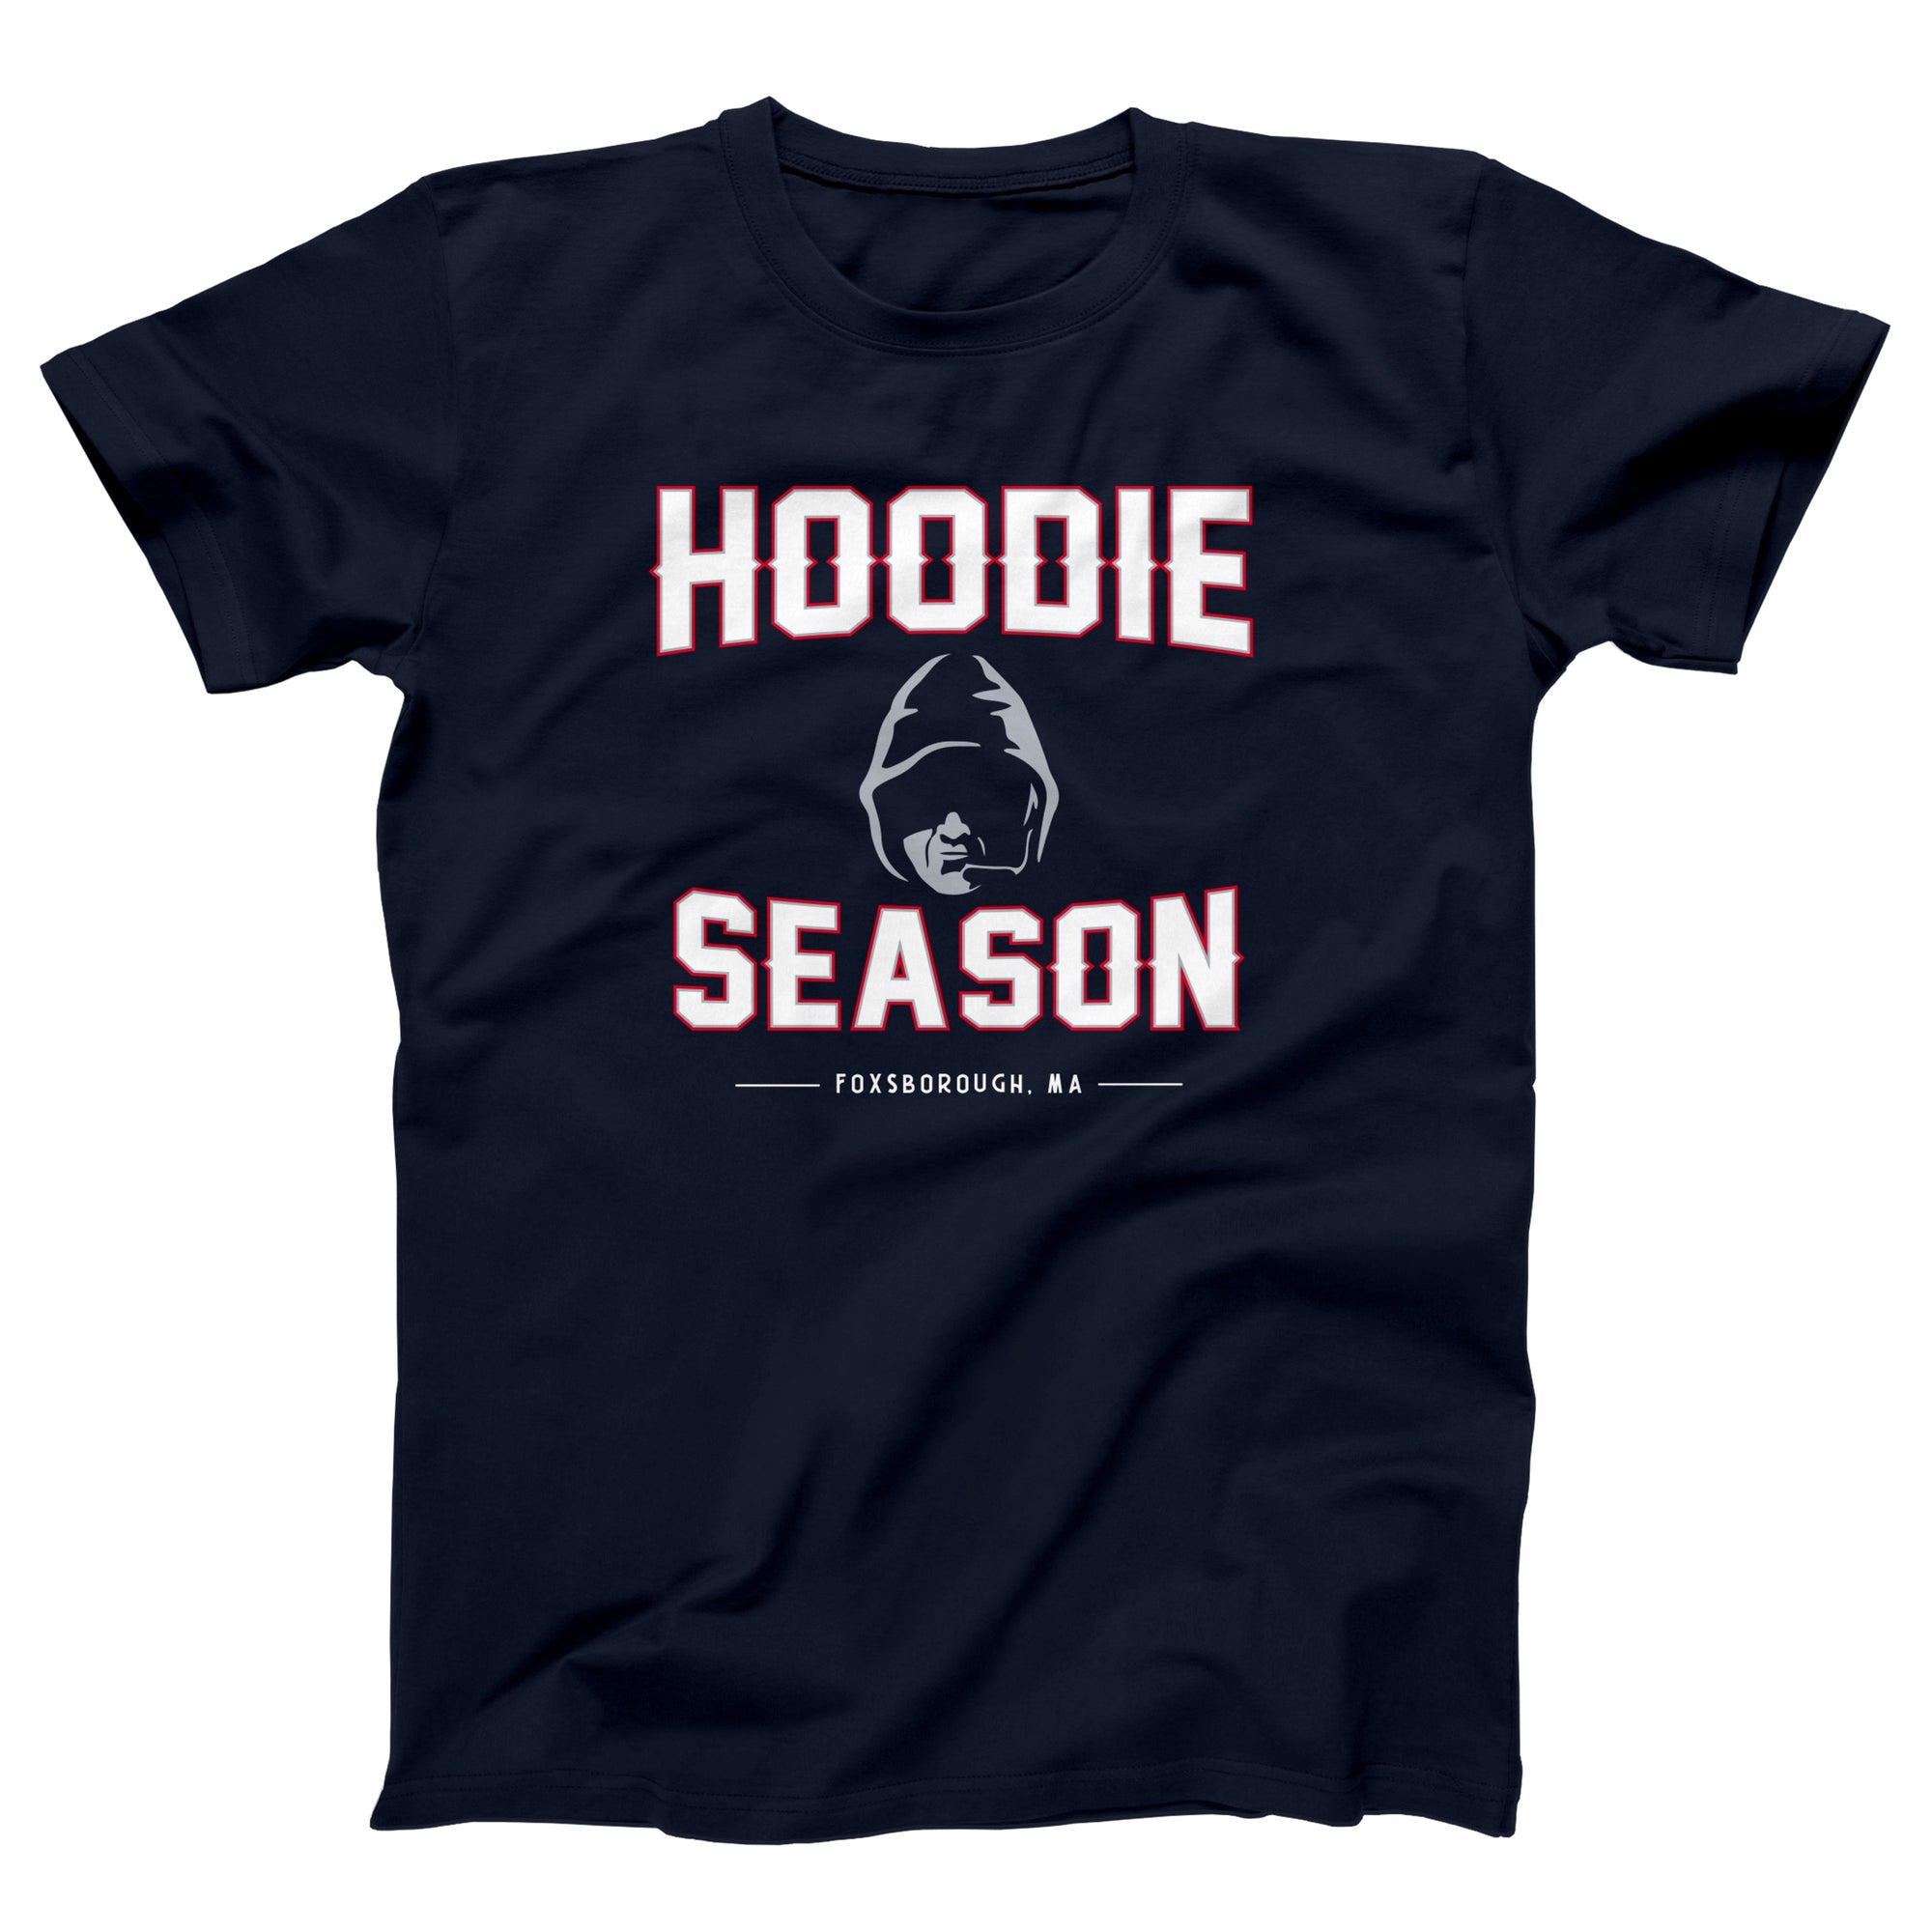 Hoodie Season Adult Unisex T-Shirt